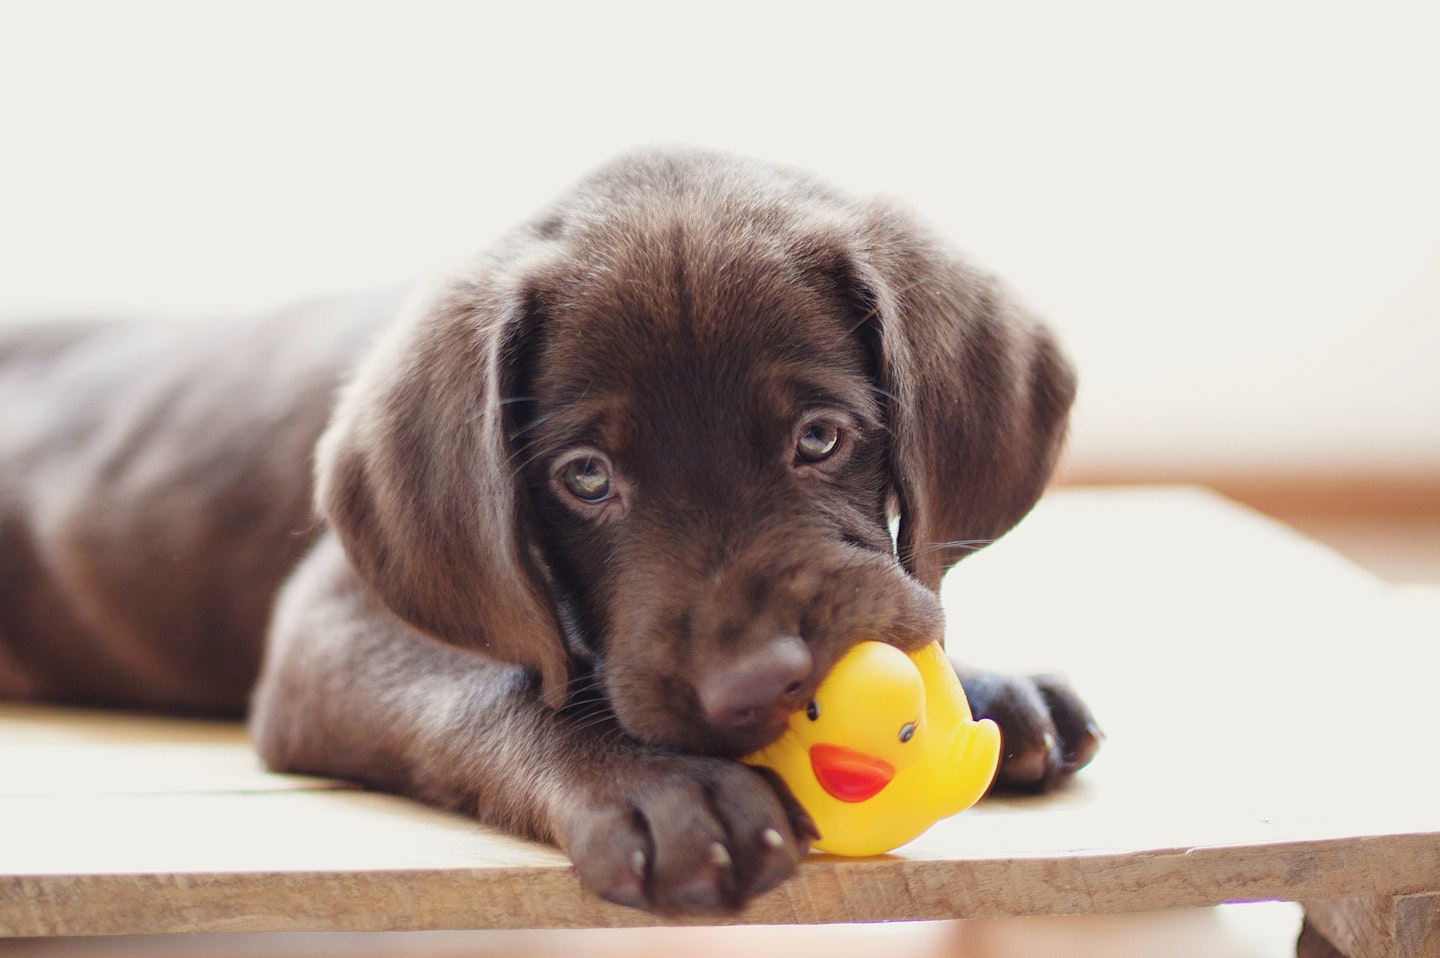 Best puppy chew toys - puppy chewing rubber duck